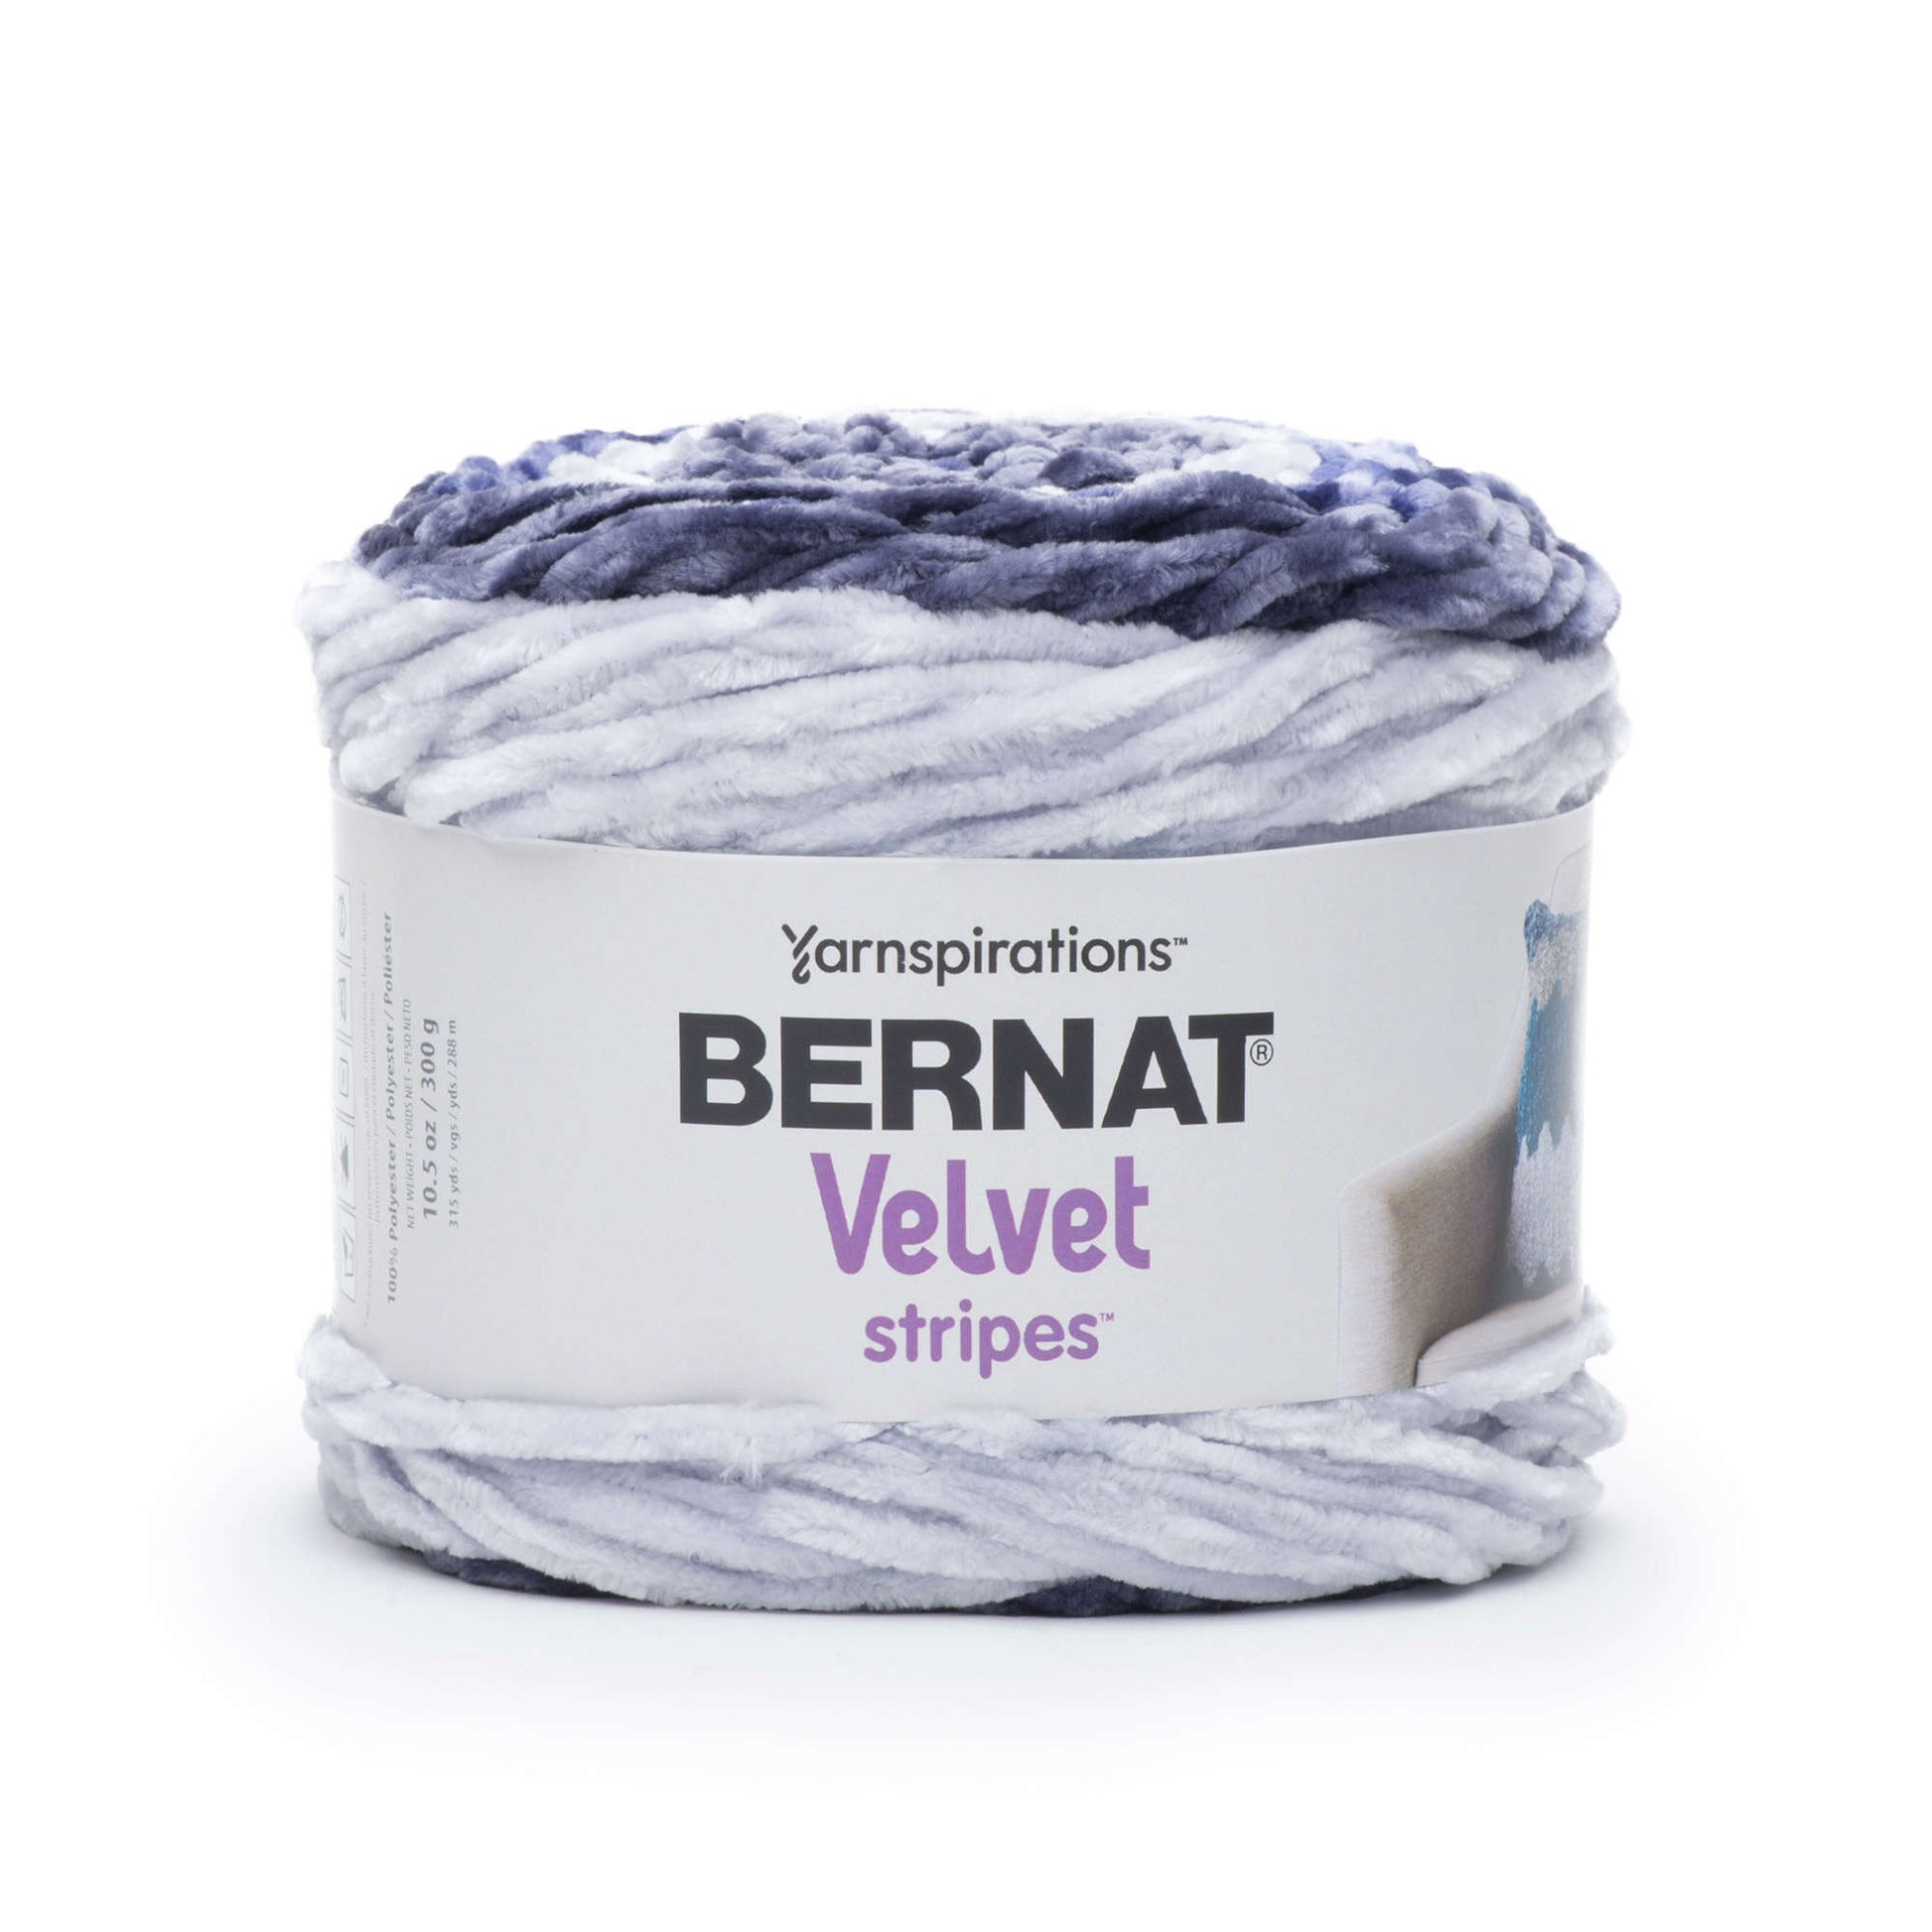 Bernat Velvet Stripes Yarn - Discontinued Shades